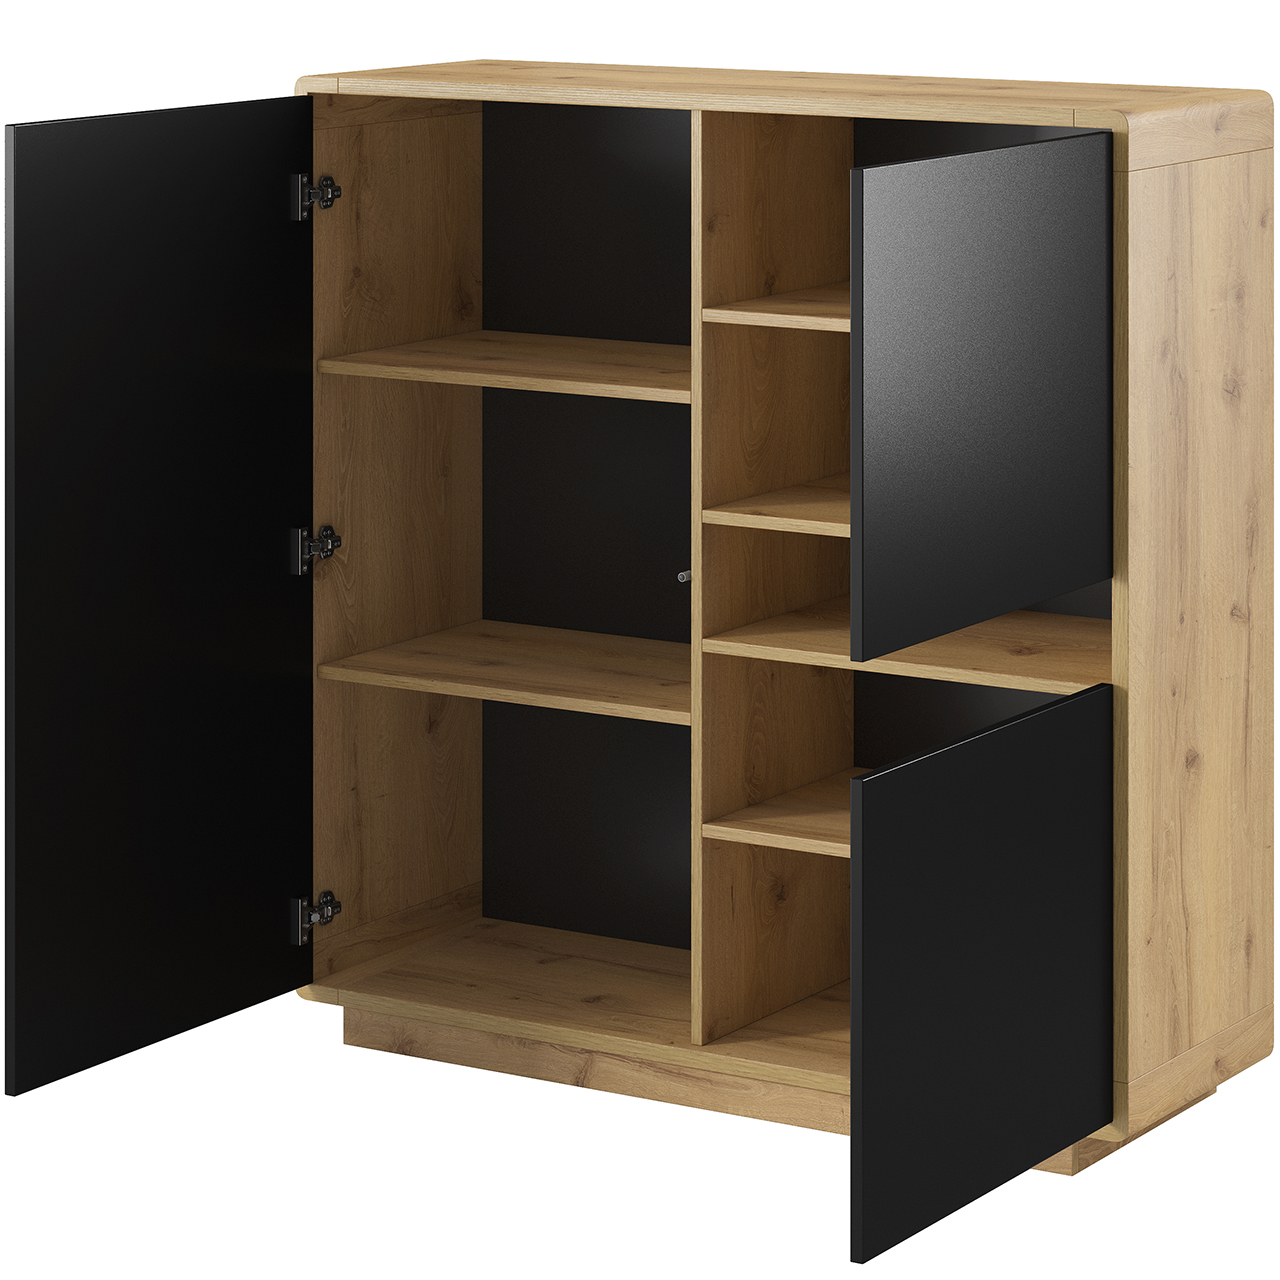 Storage shop - cabinet ASTON Furnitop taurus / AO42 black